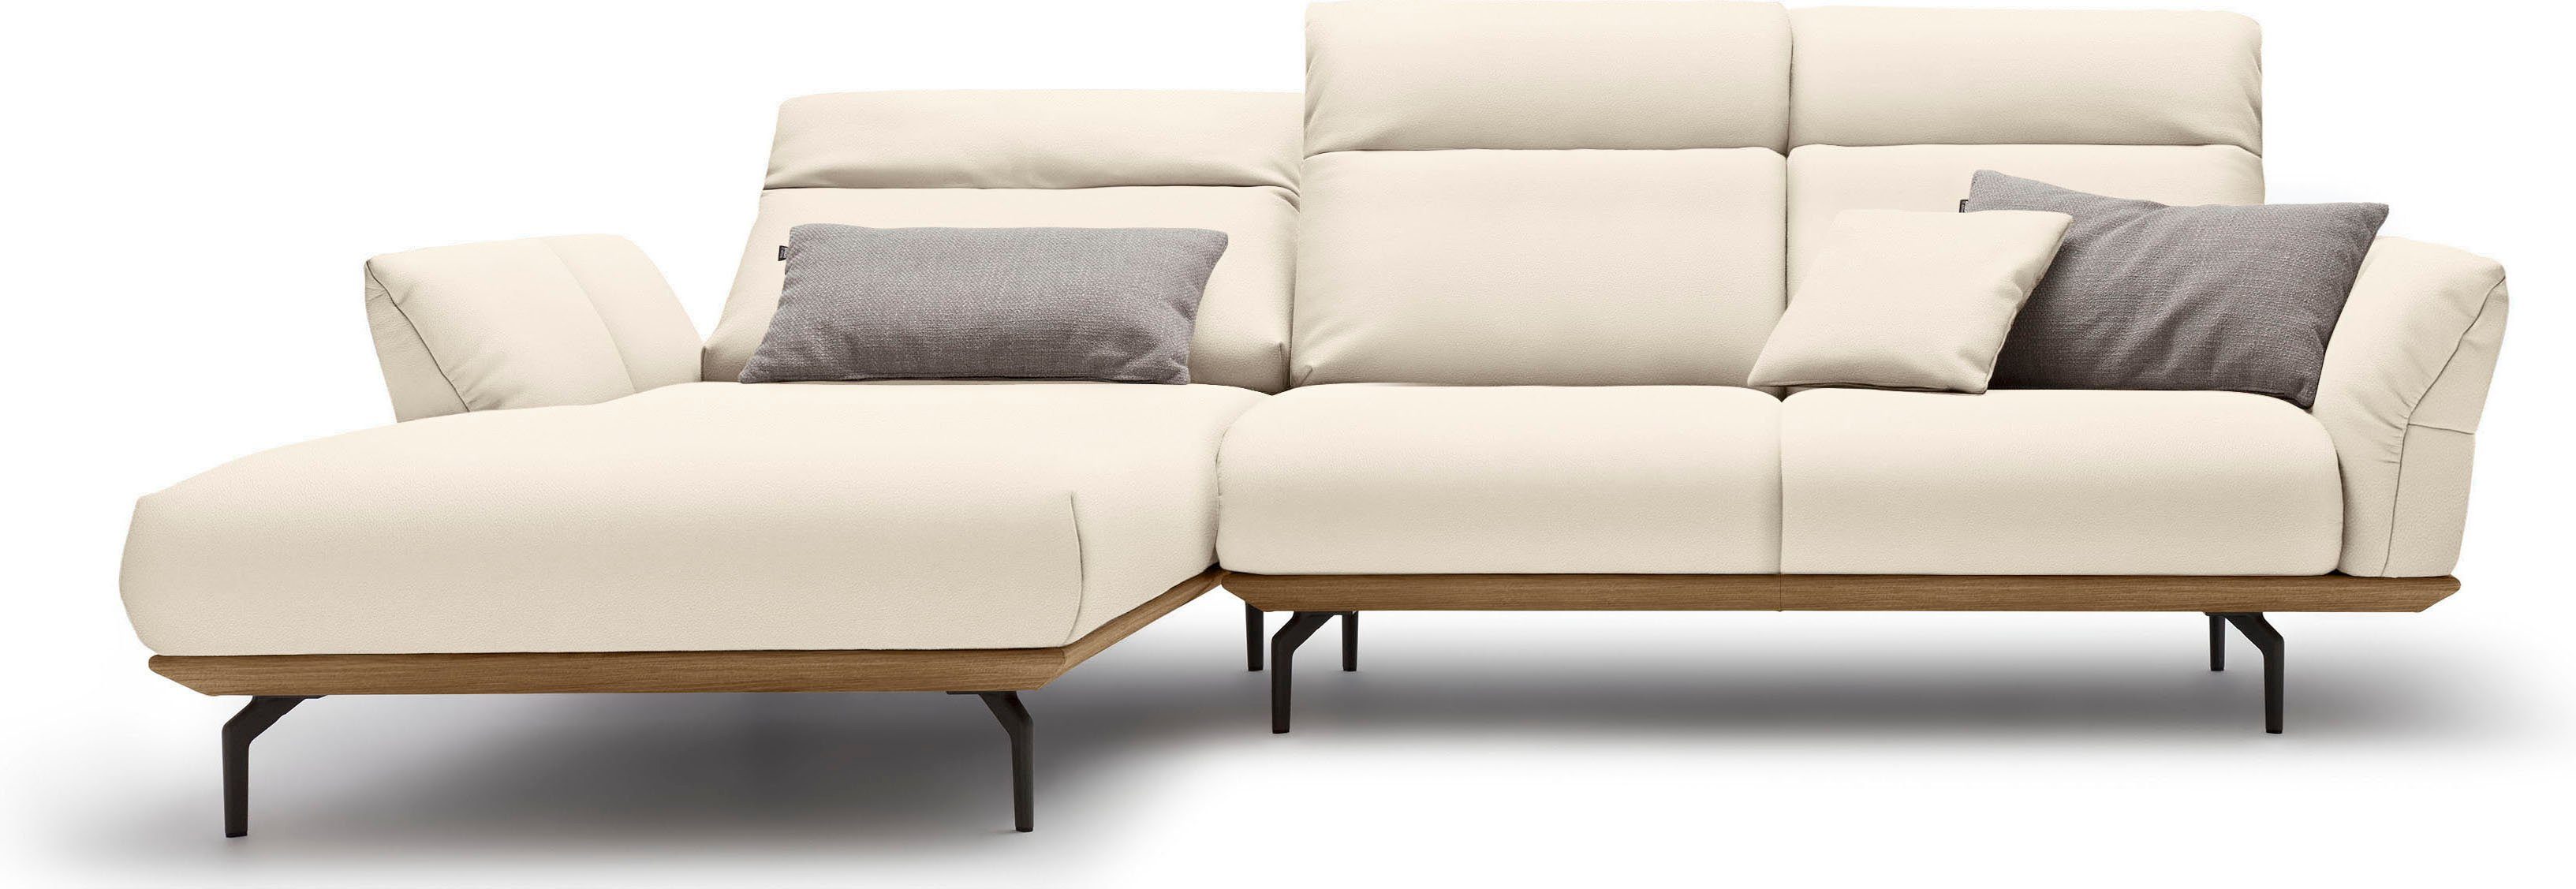 sofa in Winkelfüße Umbragrau, Breite Nussbaum, in hülsta Sockel cm hs.460, 298 Ecksofa